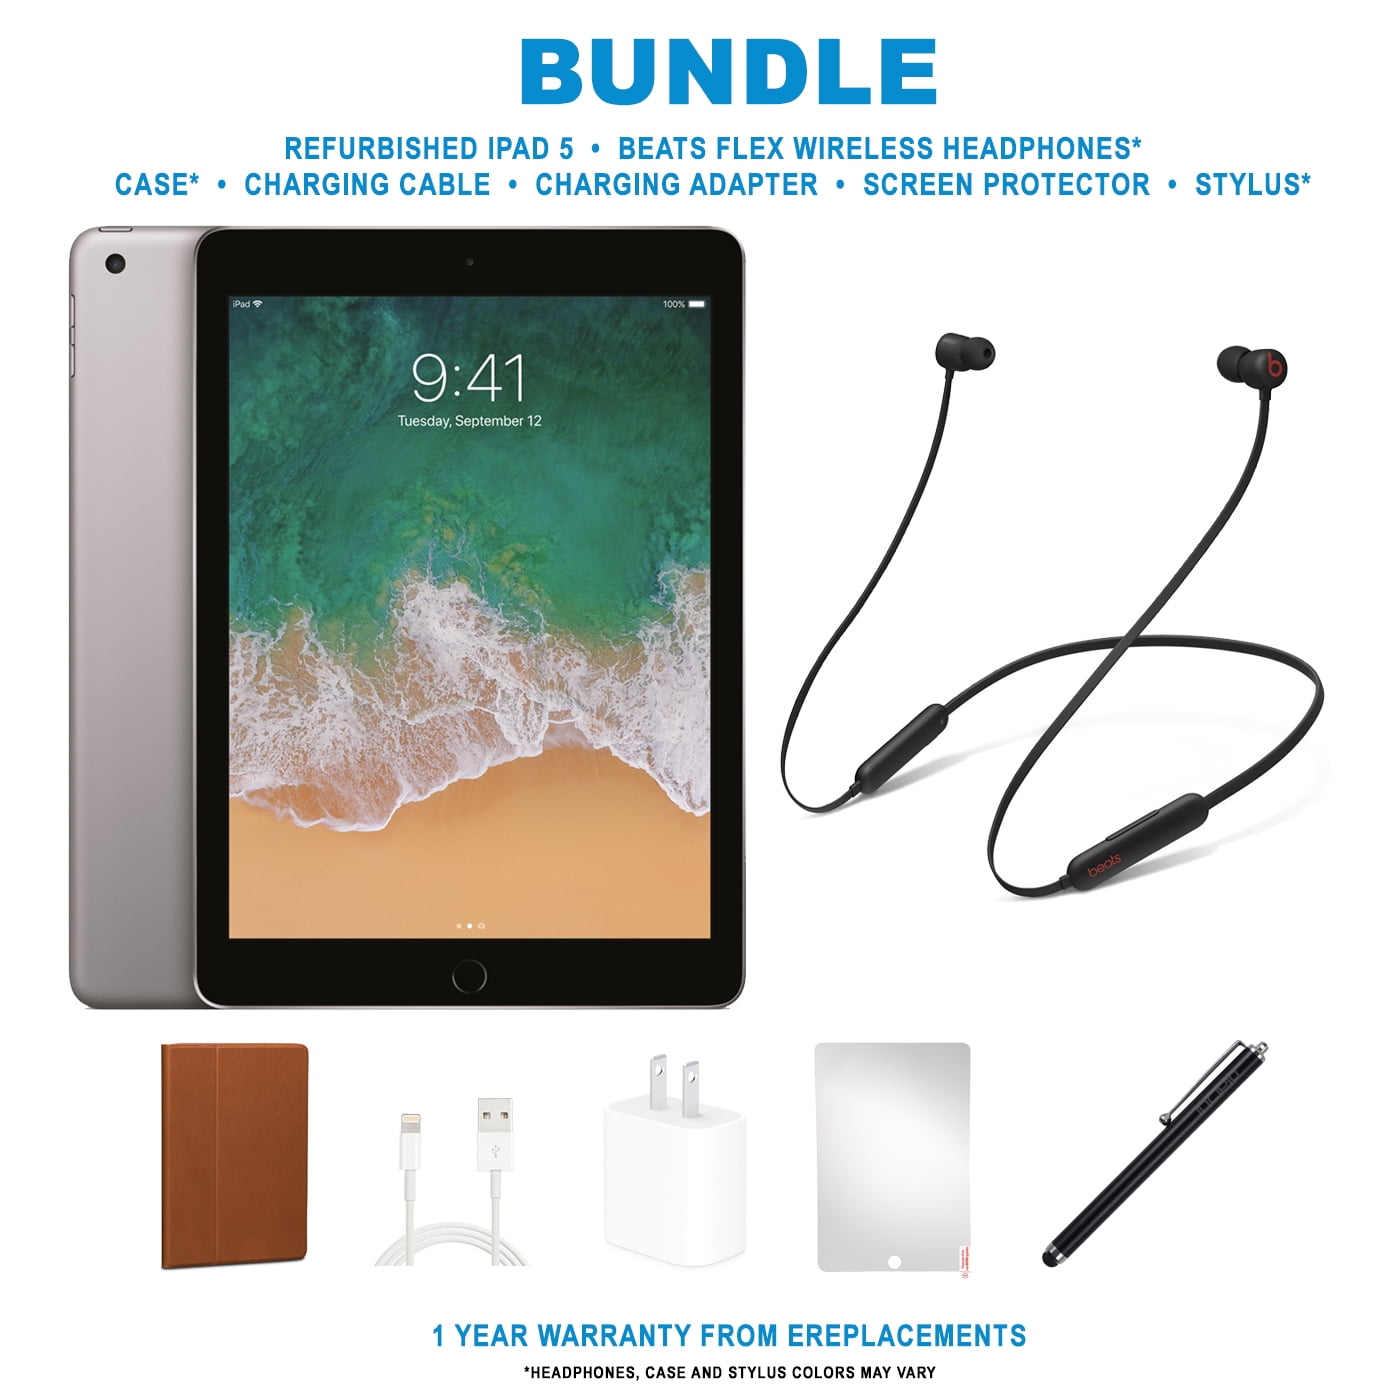 Restored Apple iPad 5 (2017) 9.7"", Bundle, 32GB, Space Gray, Wi-Fi Only, Beats Flex, Case, Tempered Glass, Stylus Pen, Charging Accessories. Walmart.com